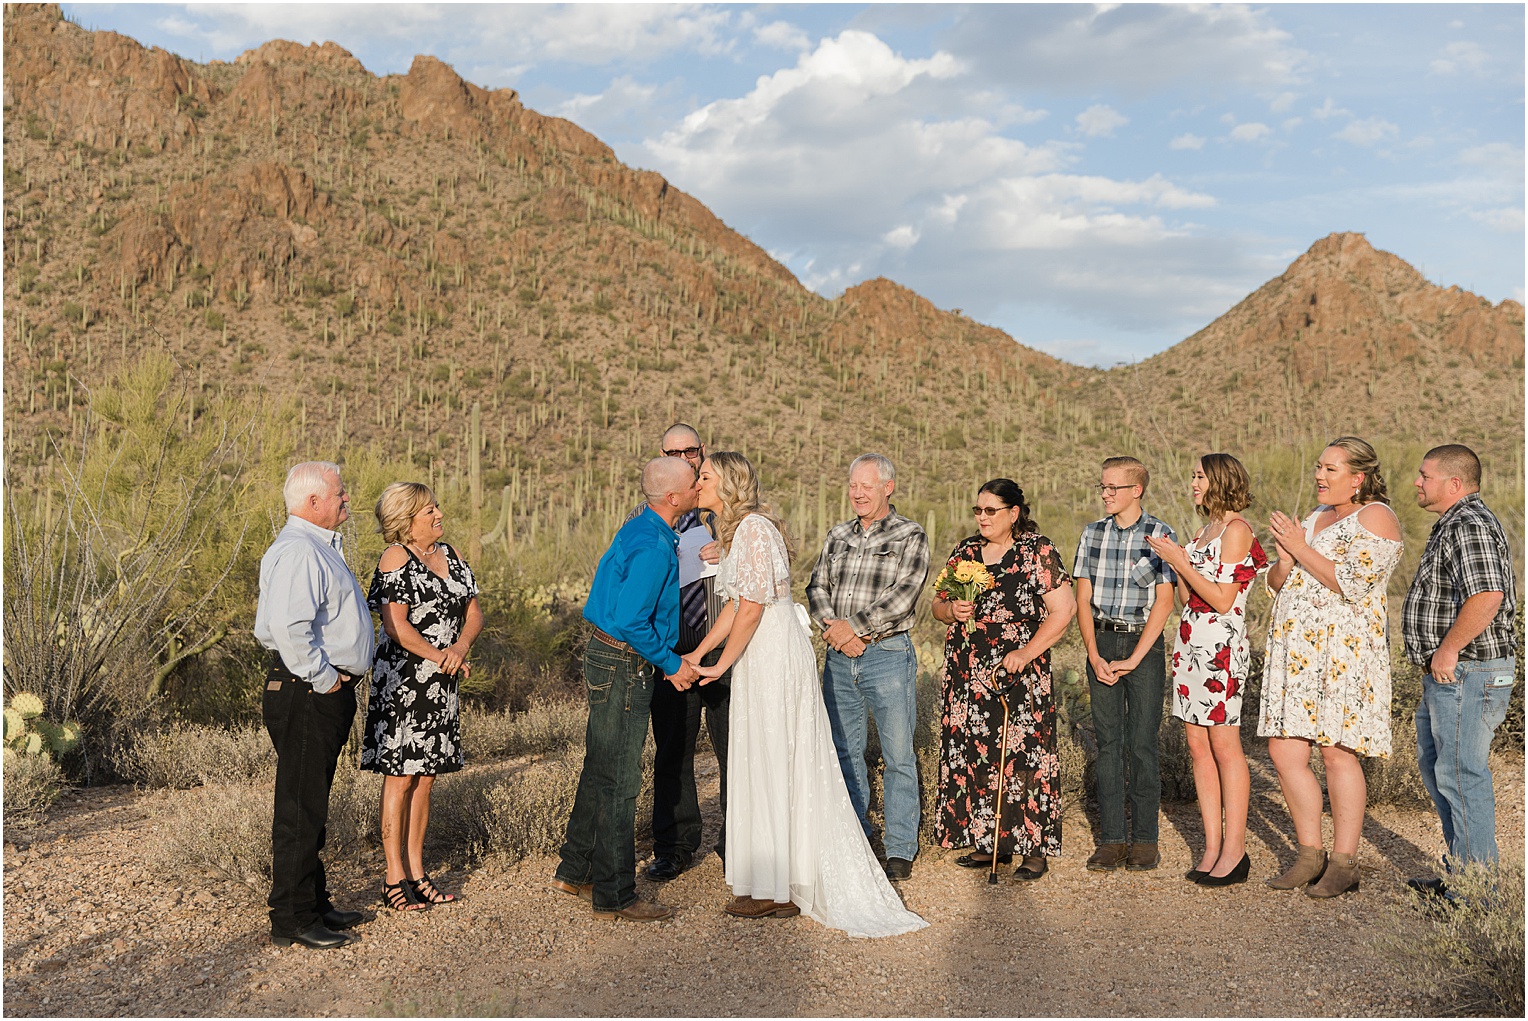 Gates Pass Wedding Tucson Arizona Andrea + Cameron intimate outdoor wedding ceremony